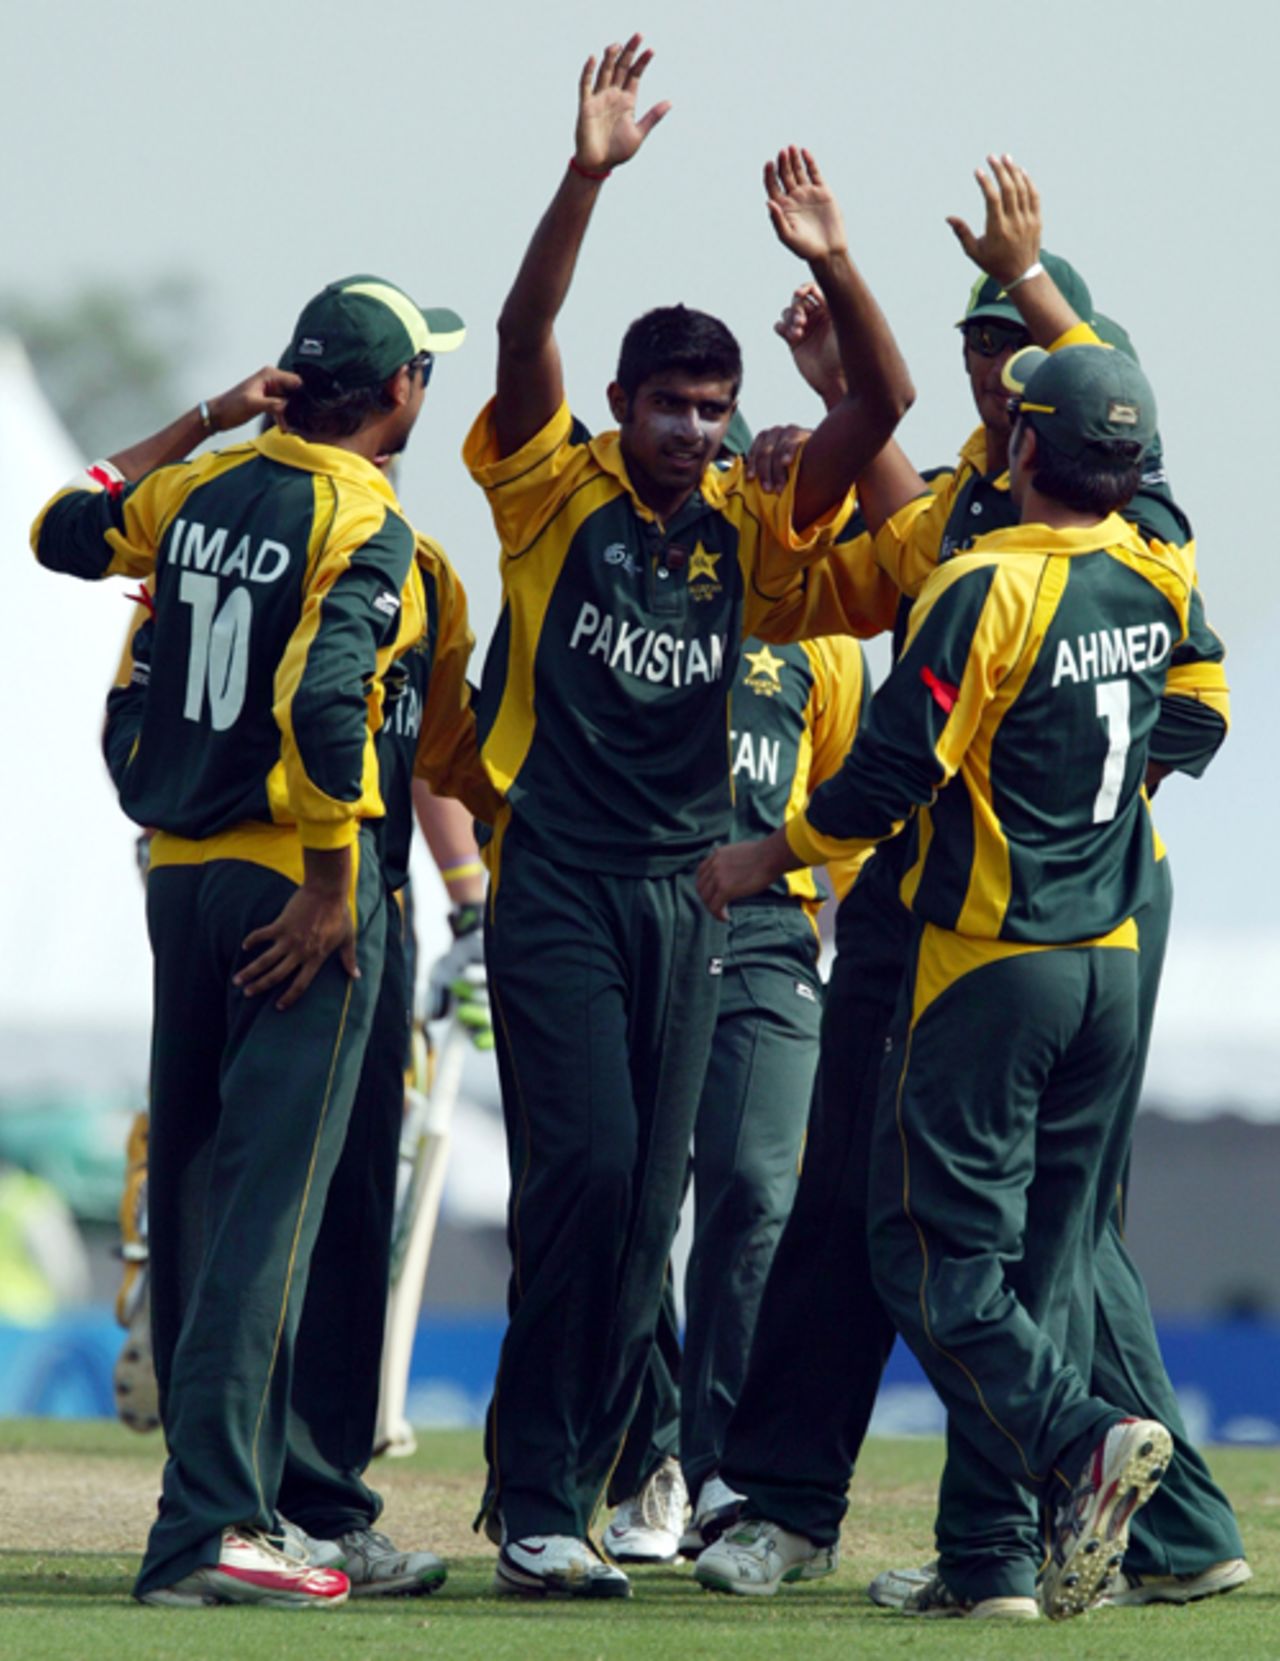 Adil Raza celebrates a wicket with his team-mates, Australia Under-19s v Pakistan U-19s, Under-19 World Cup quarter-finals, Kuala Lumpur, February 25, 2008 
